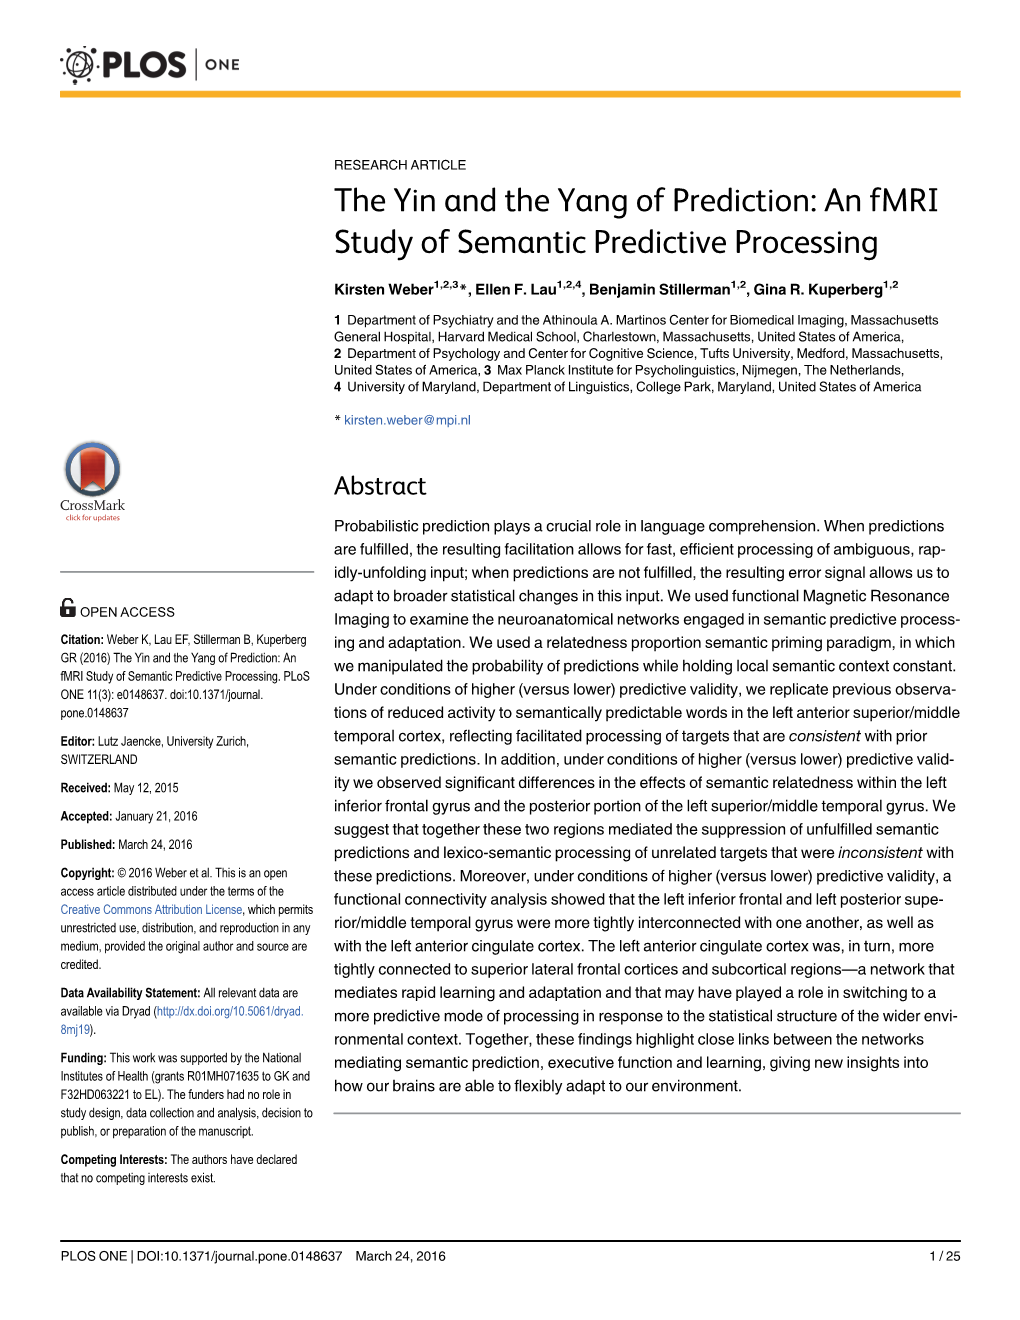 An Fmri Study of Semantic Predictive Processing